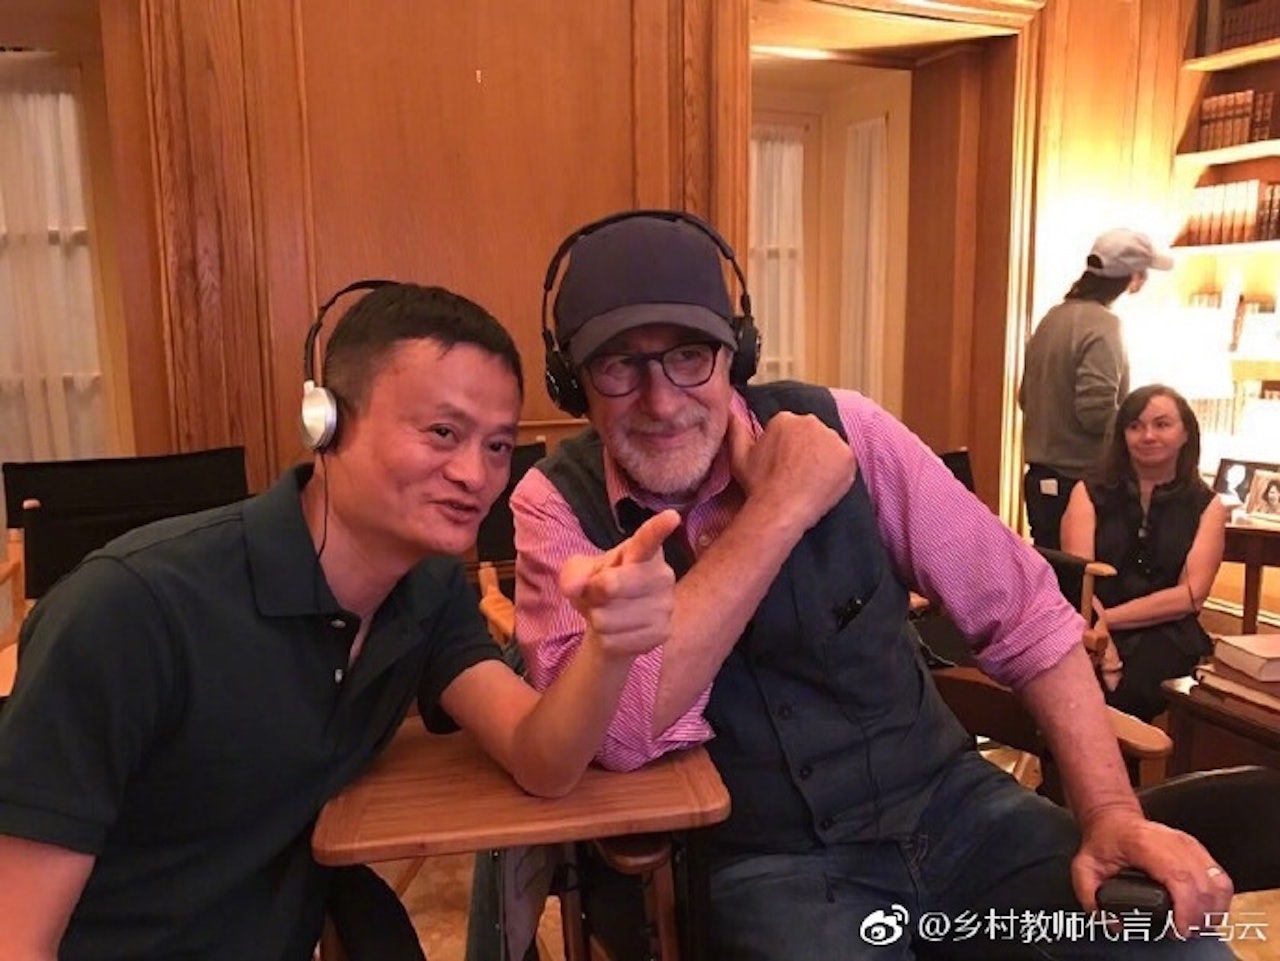 Jack Ma and Steven Spielberg on site. Image via Jack Ma's weibo account.